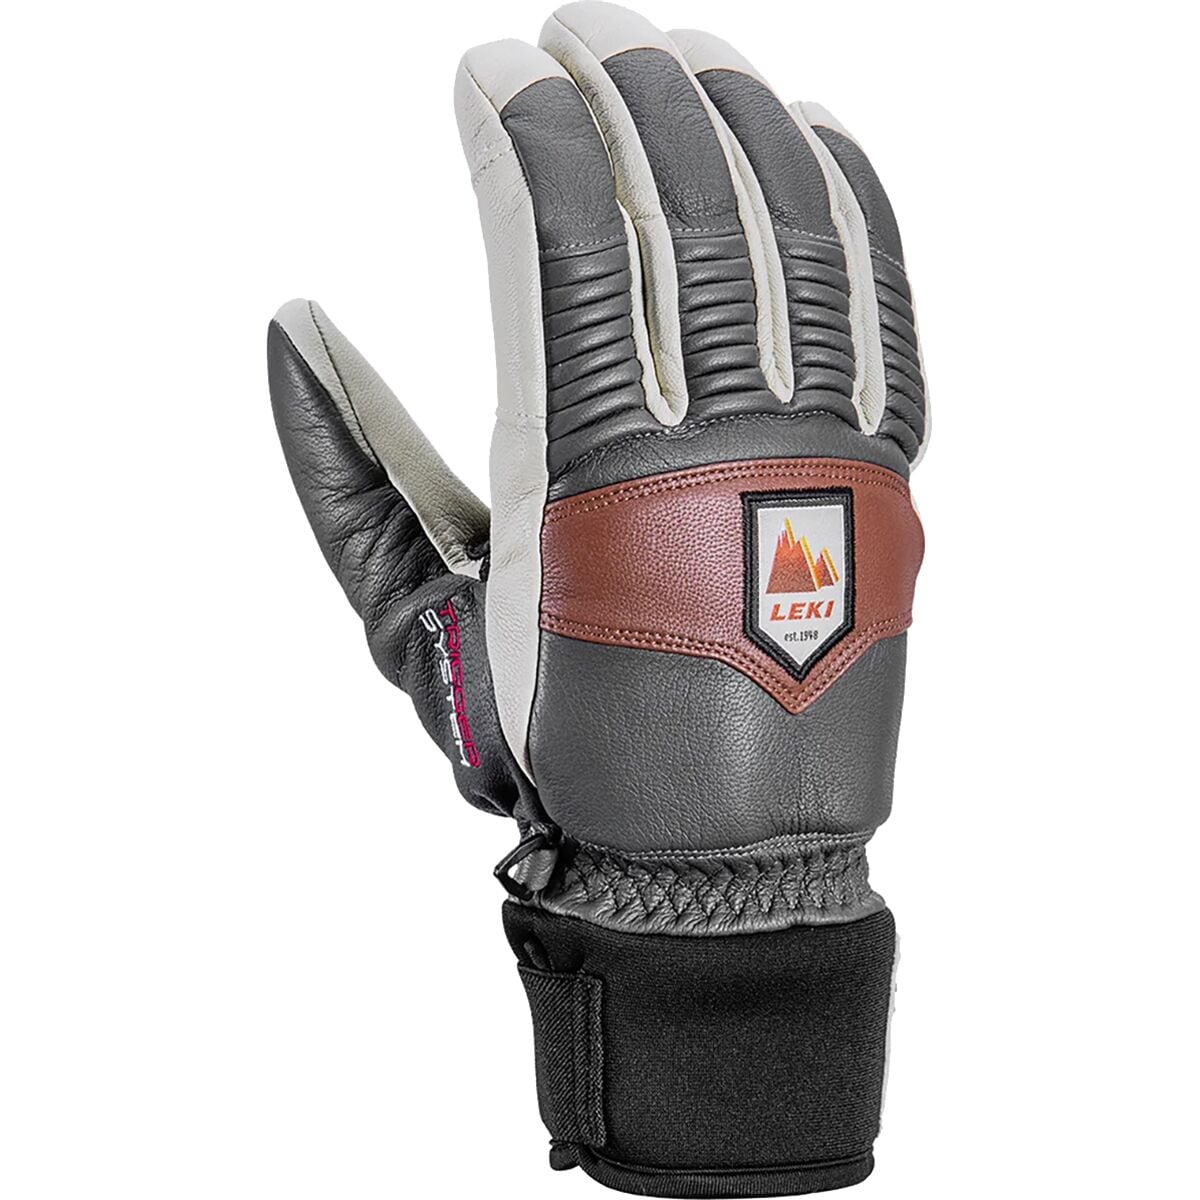 LEKI Patrol 3D Glove - Men's